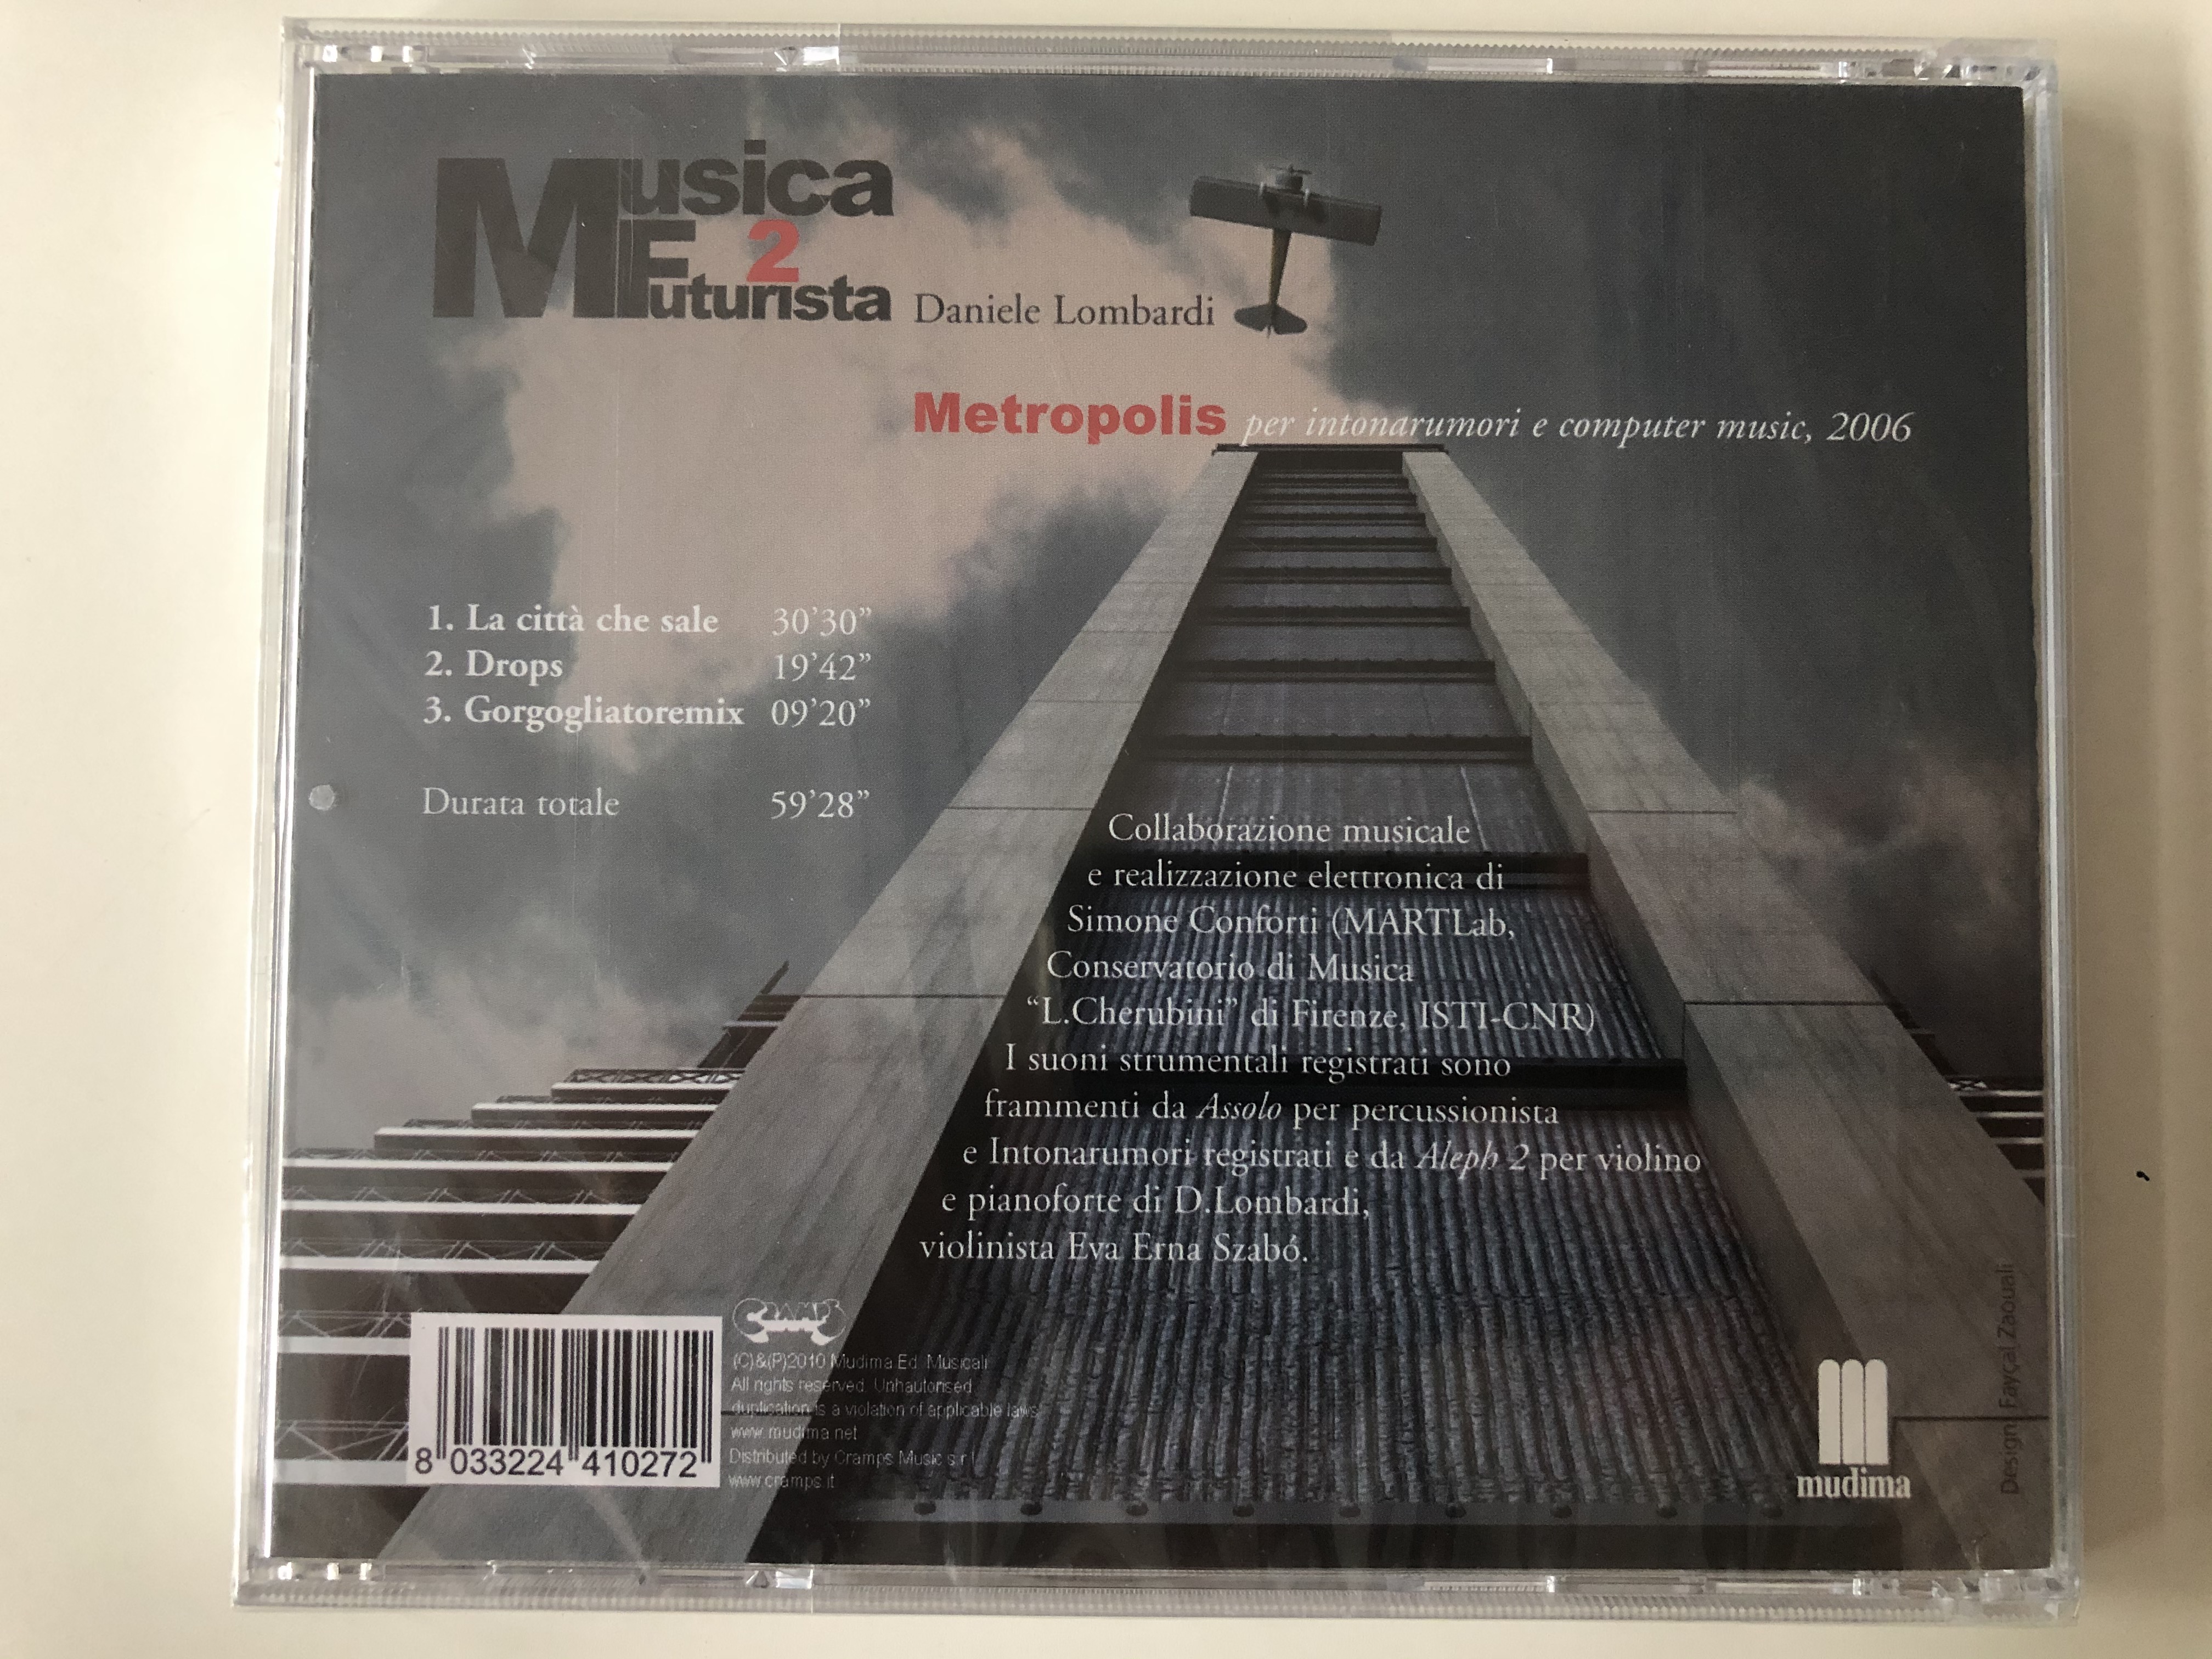 musica-futurista-2-daniele-lombardi-metropolis-per-intonarumori-e-computer-music-mudima-ed.-musicali-audio-cd-2010-8033224410272-2-.jpg